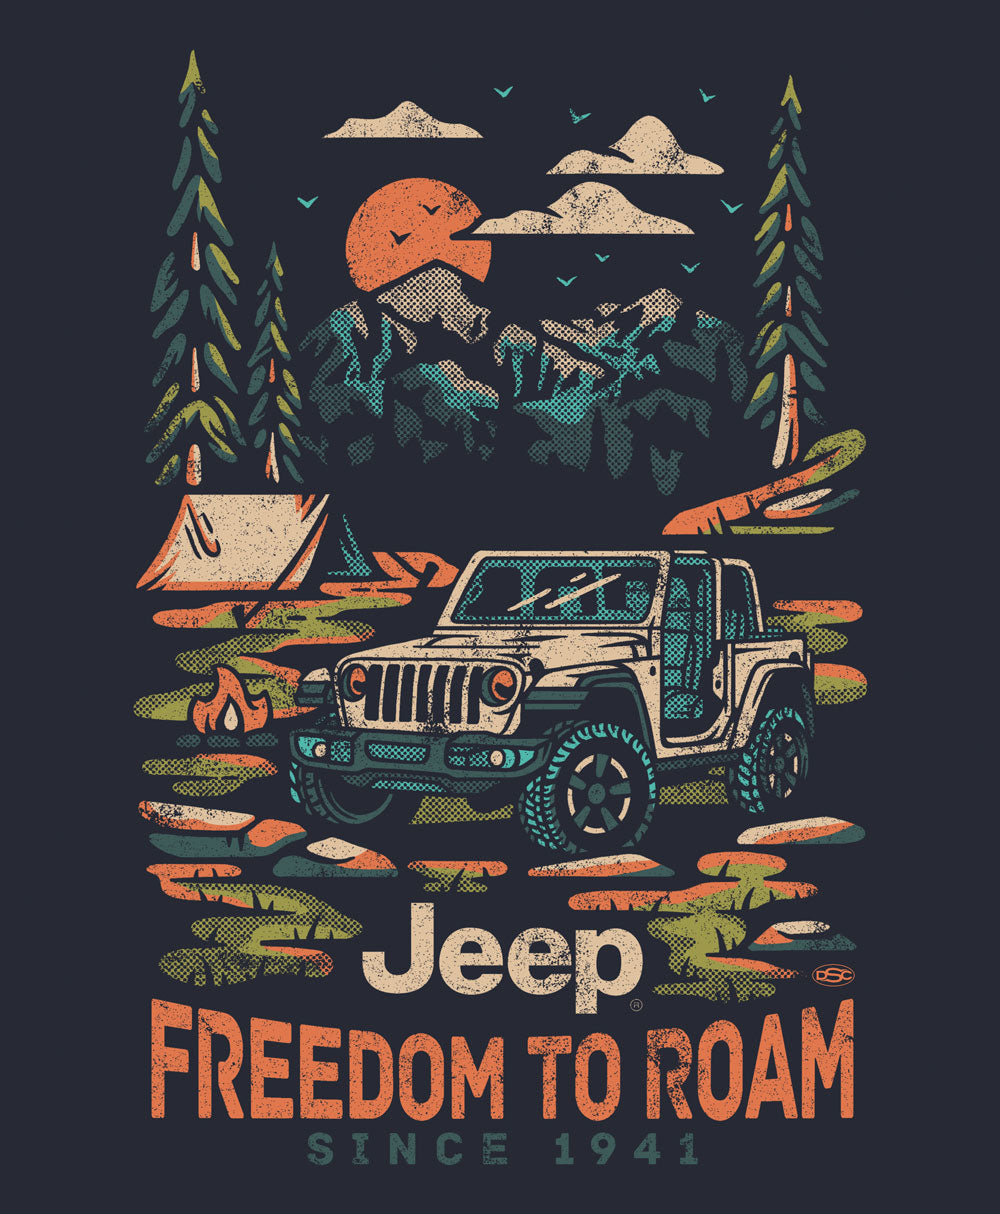 Mens Jeep® Freedom To Roam T-Shirt - Navy Blue